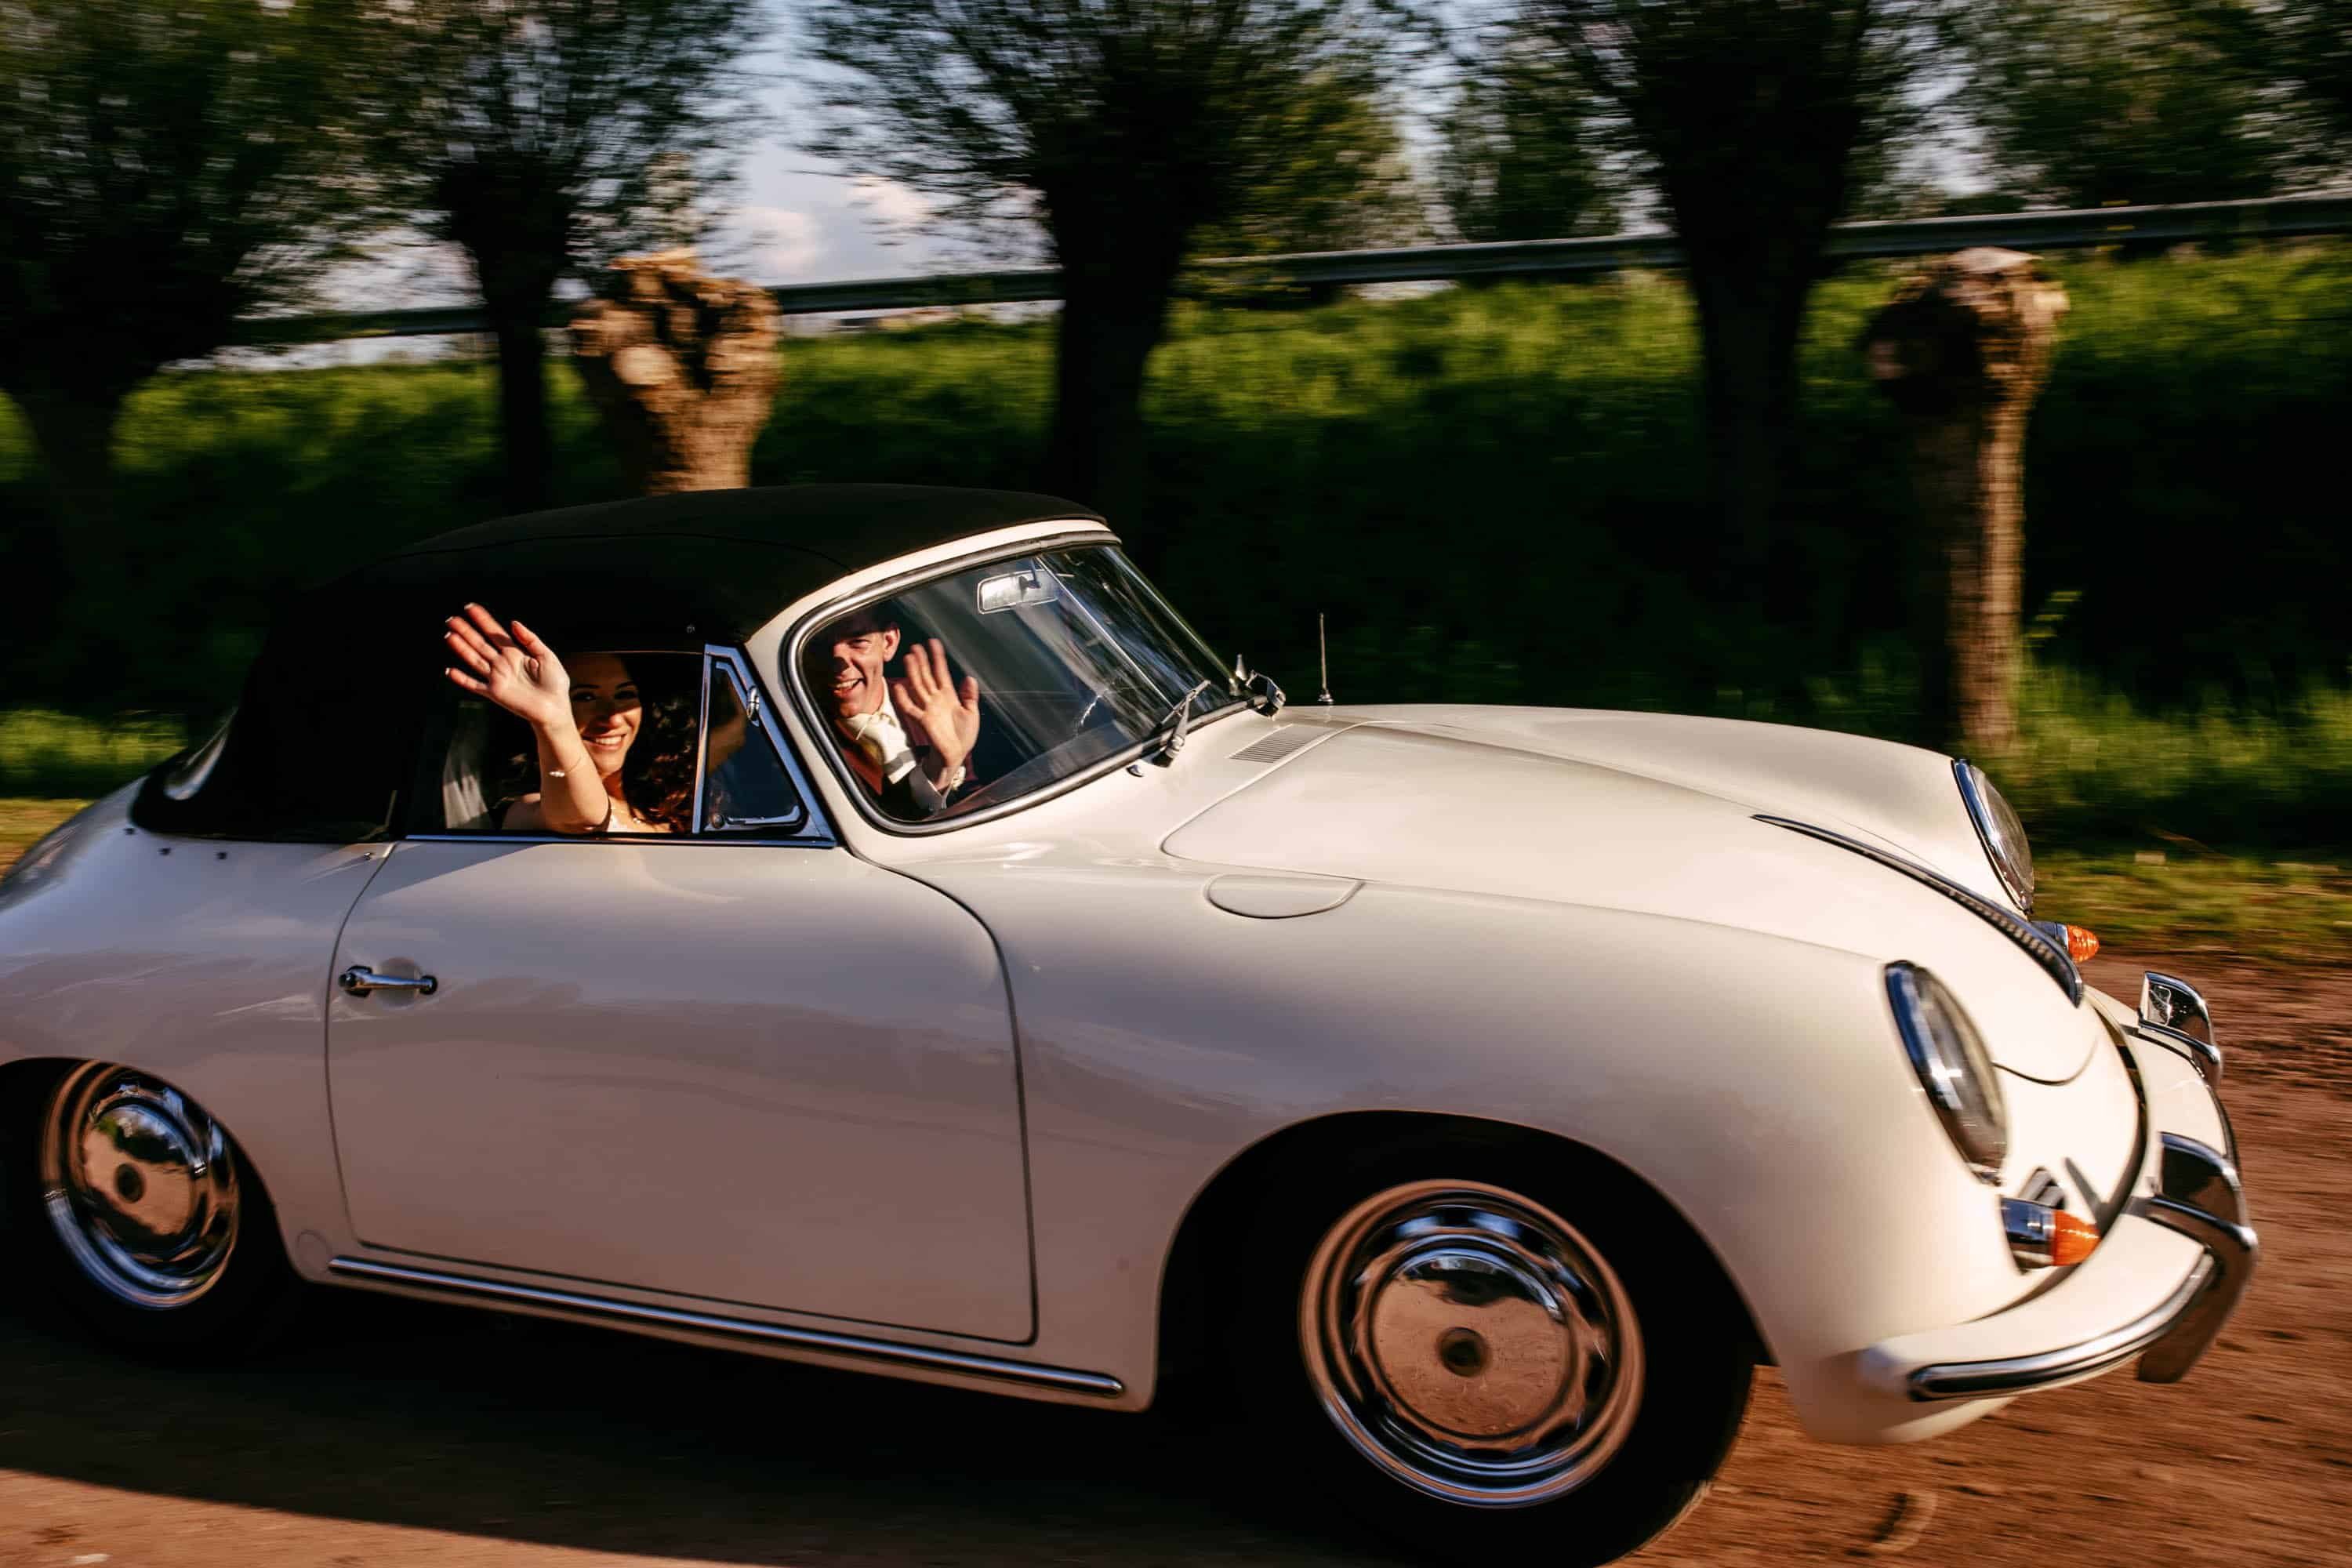 A woman drives down a country road in a white Porsche car.